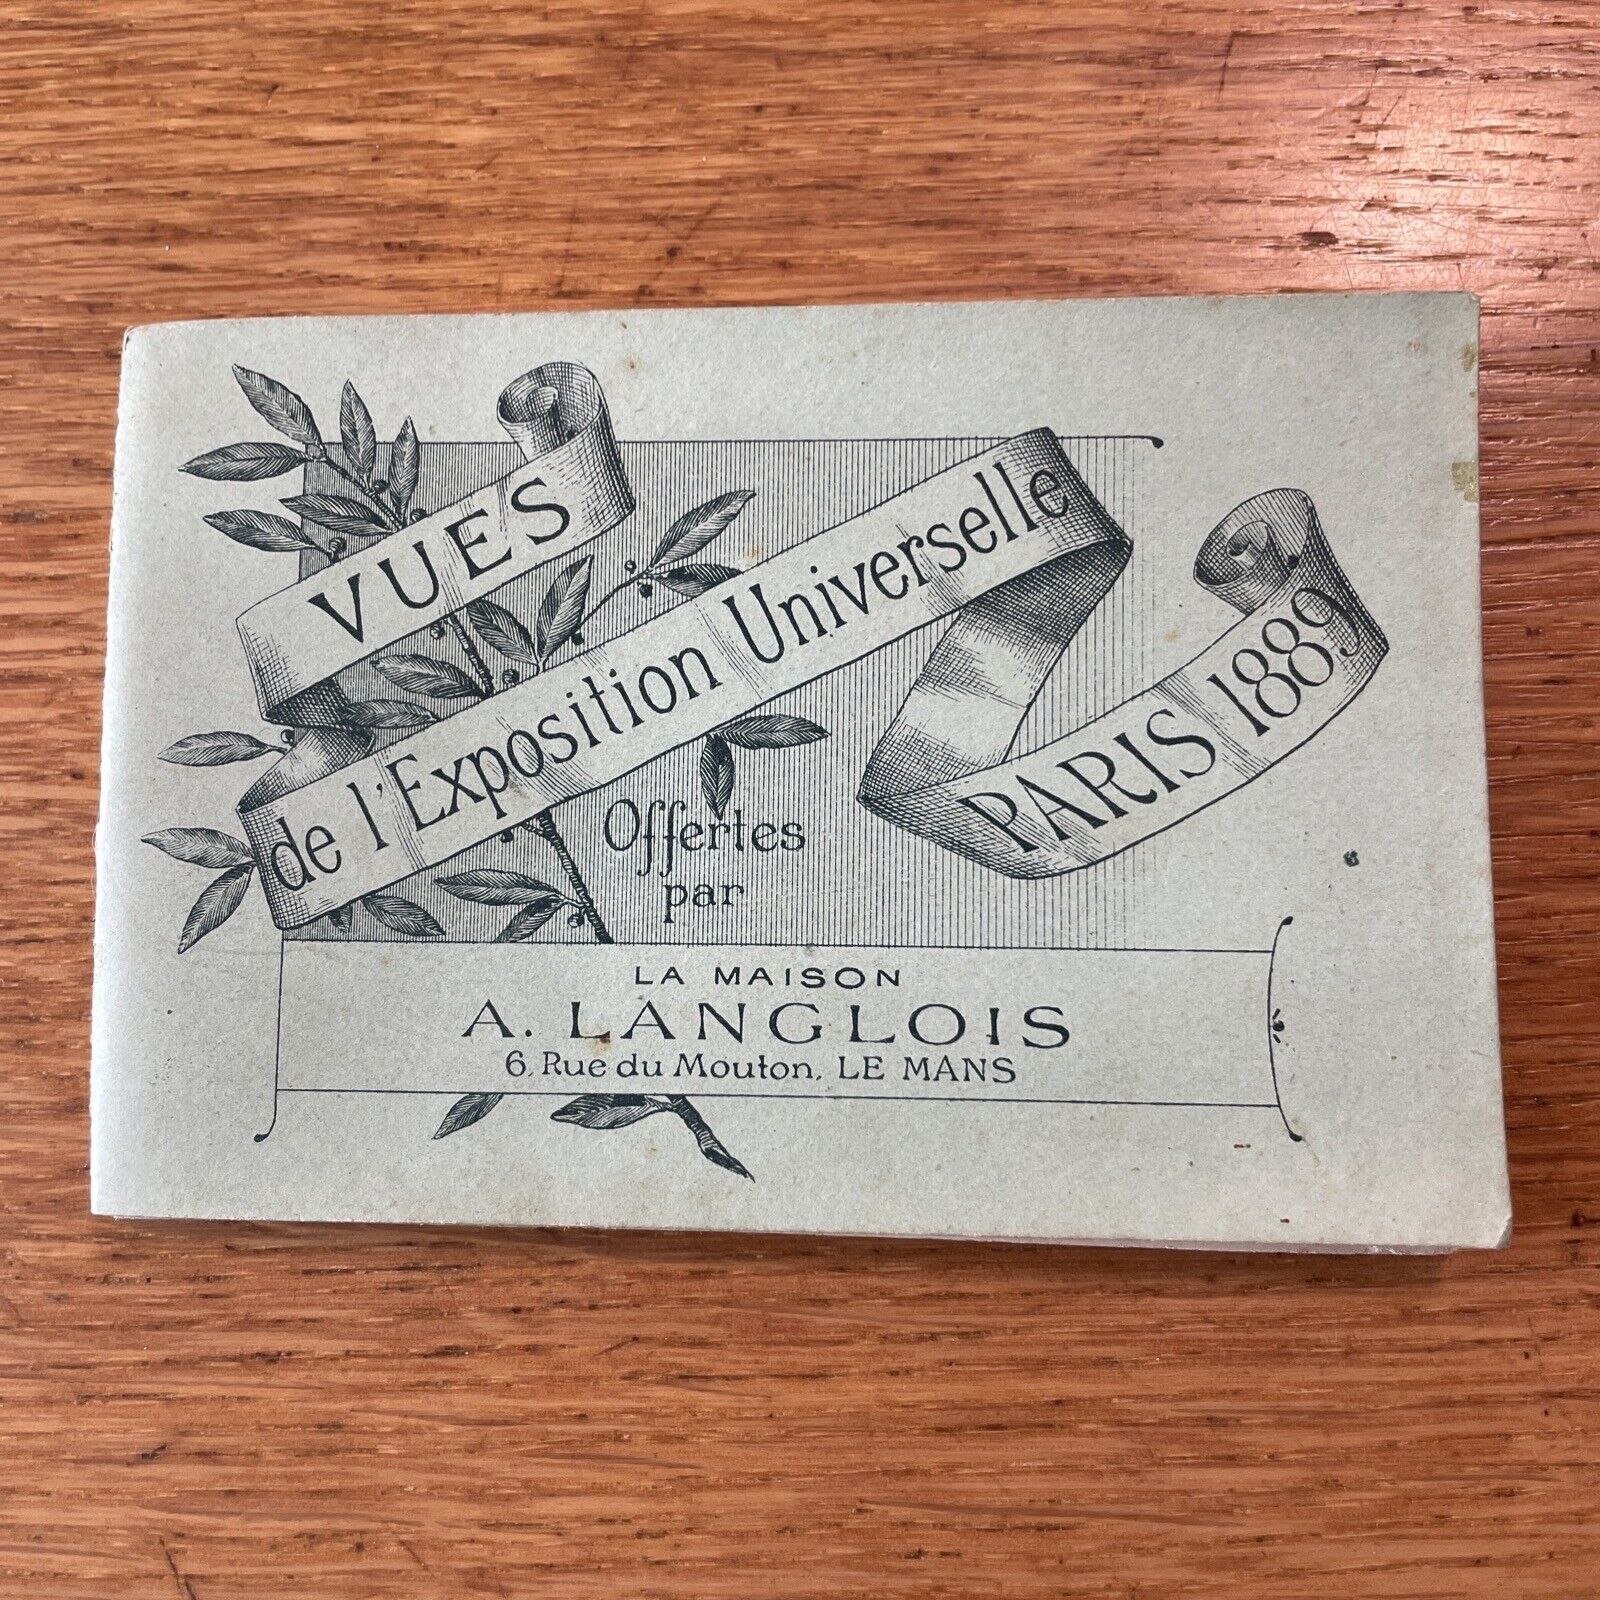 CHROMO LE MANS Chocolat BESNIER LANGLOIS leaflet - UNIVERSAL EXHIBITION - 19th century